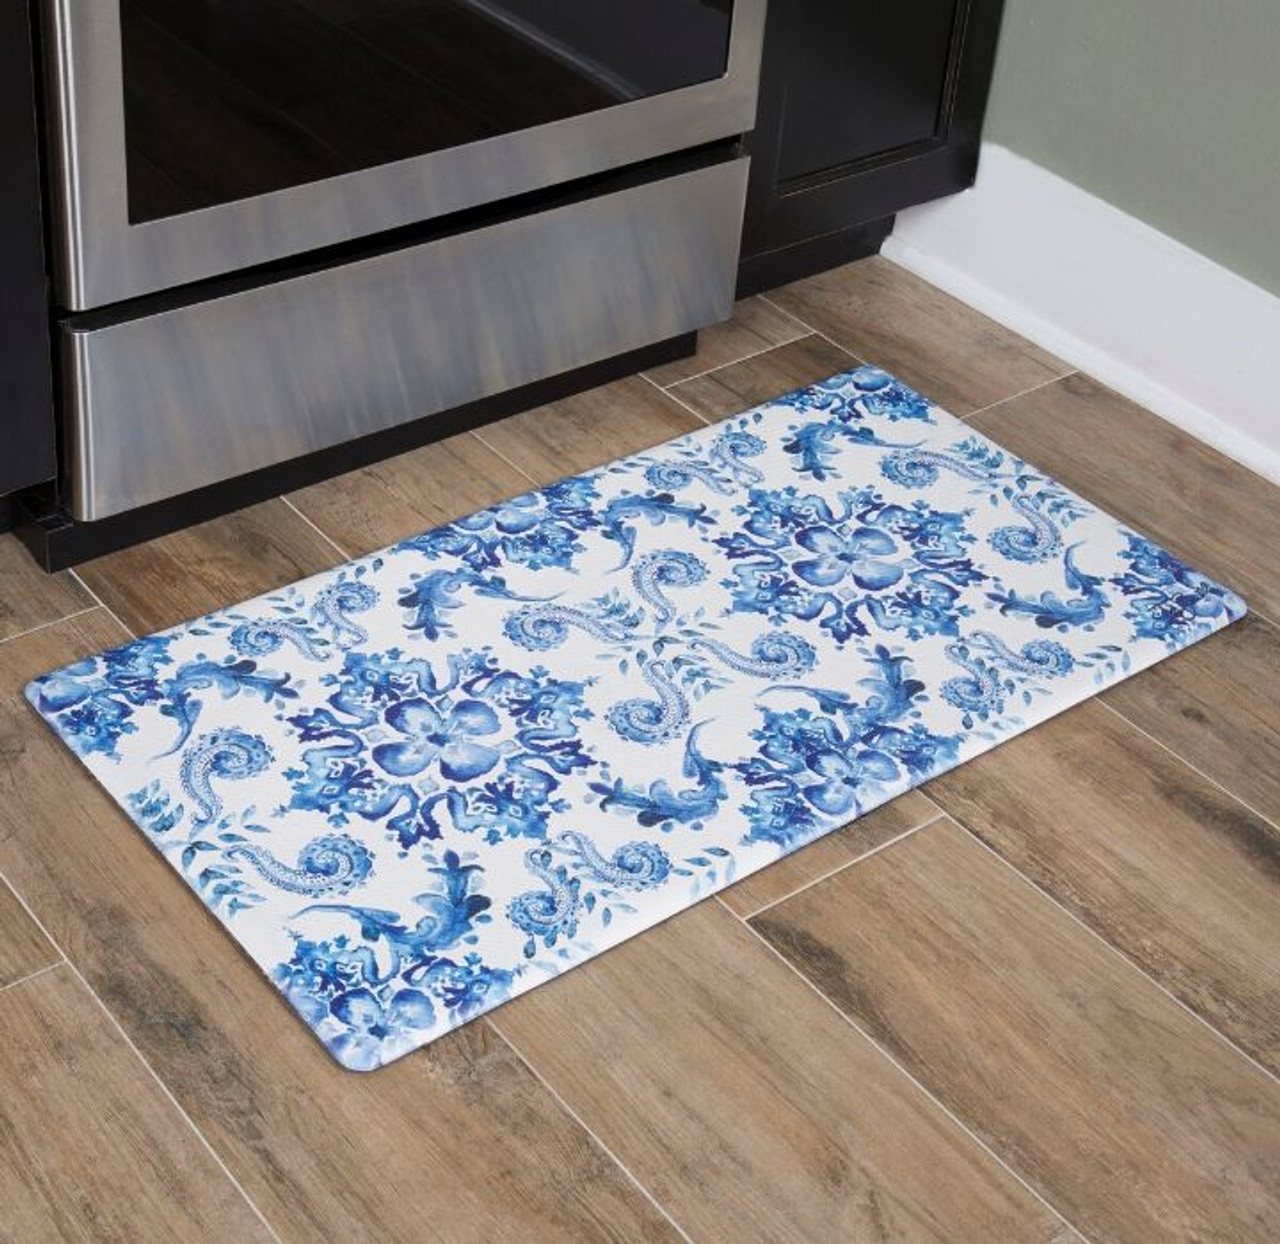 39" x 20" Oversized Anti-Fatigue Embossed Floor Mat product image